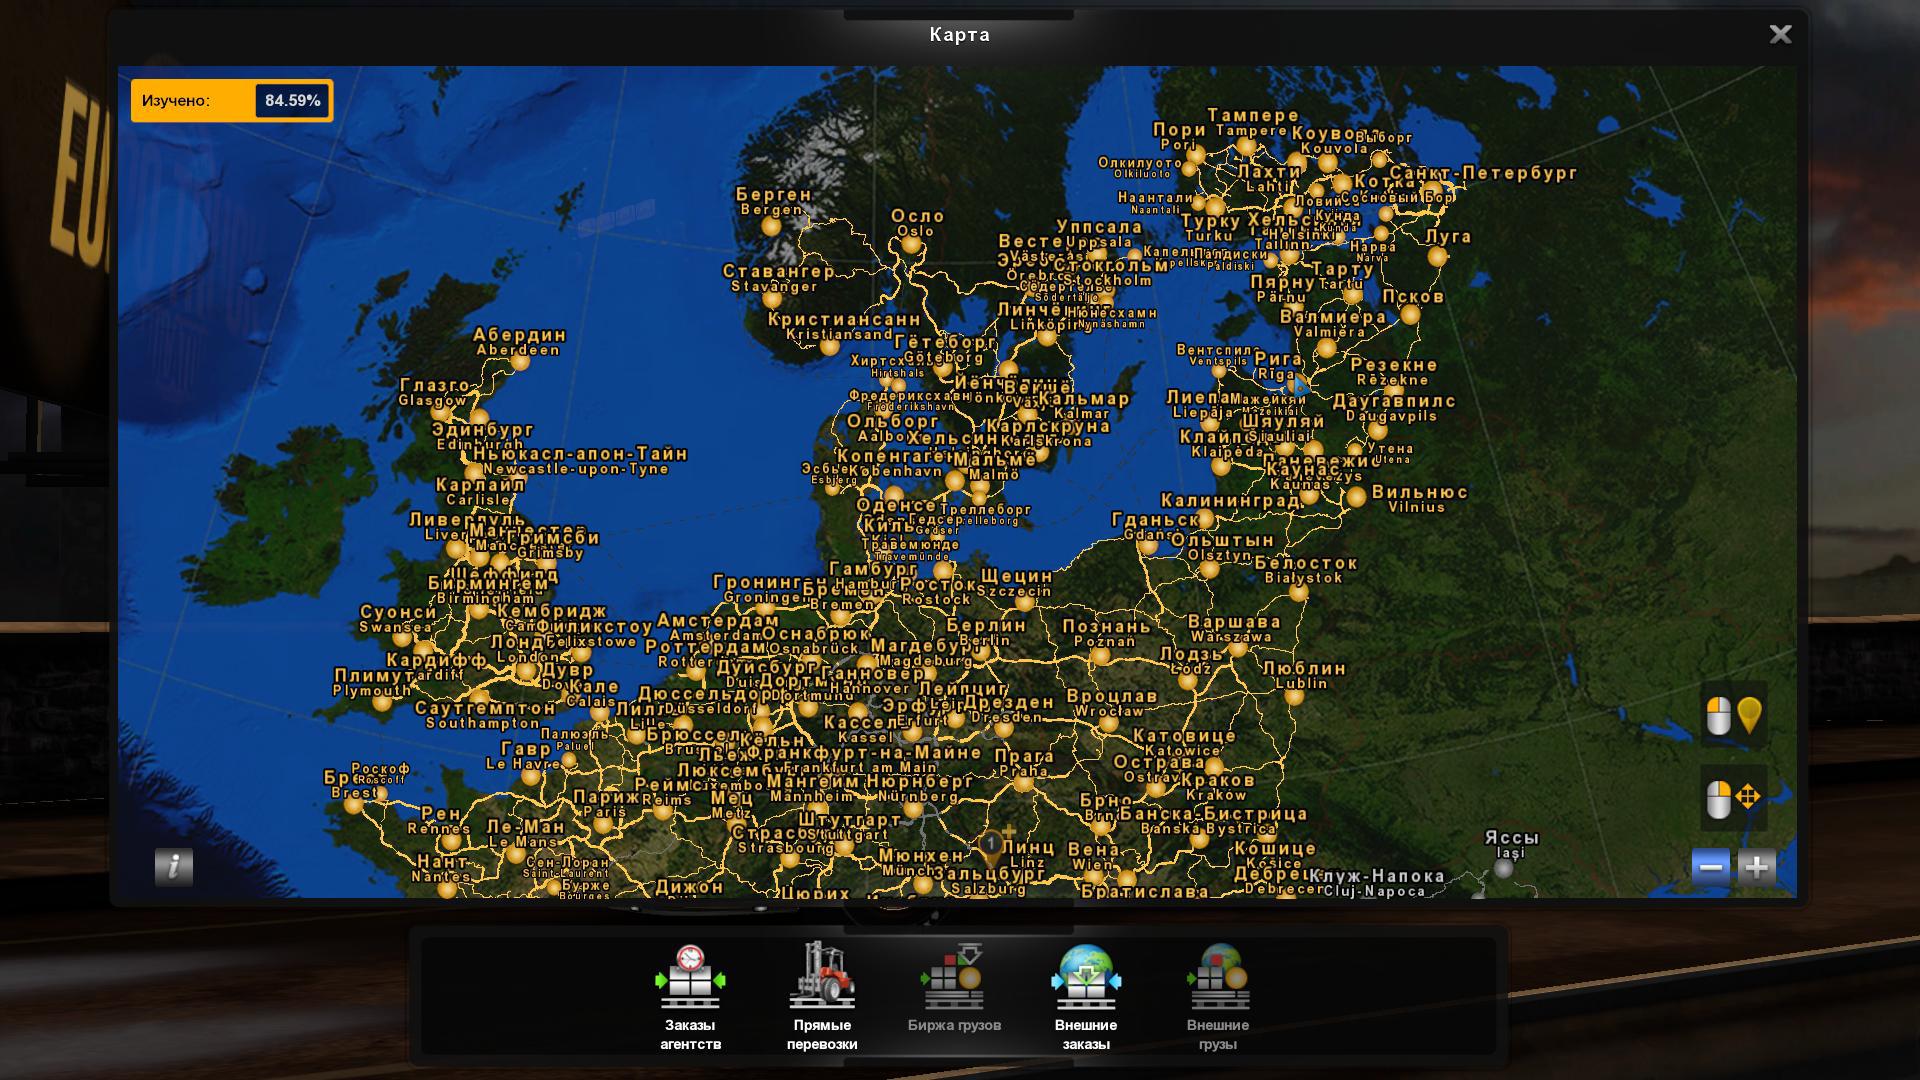 Euro Truck Simulator 2 PC – Sat Media